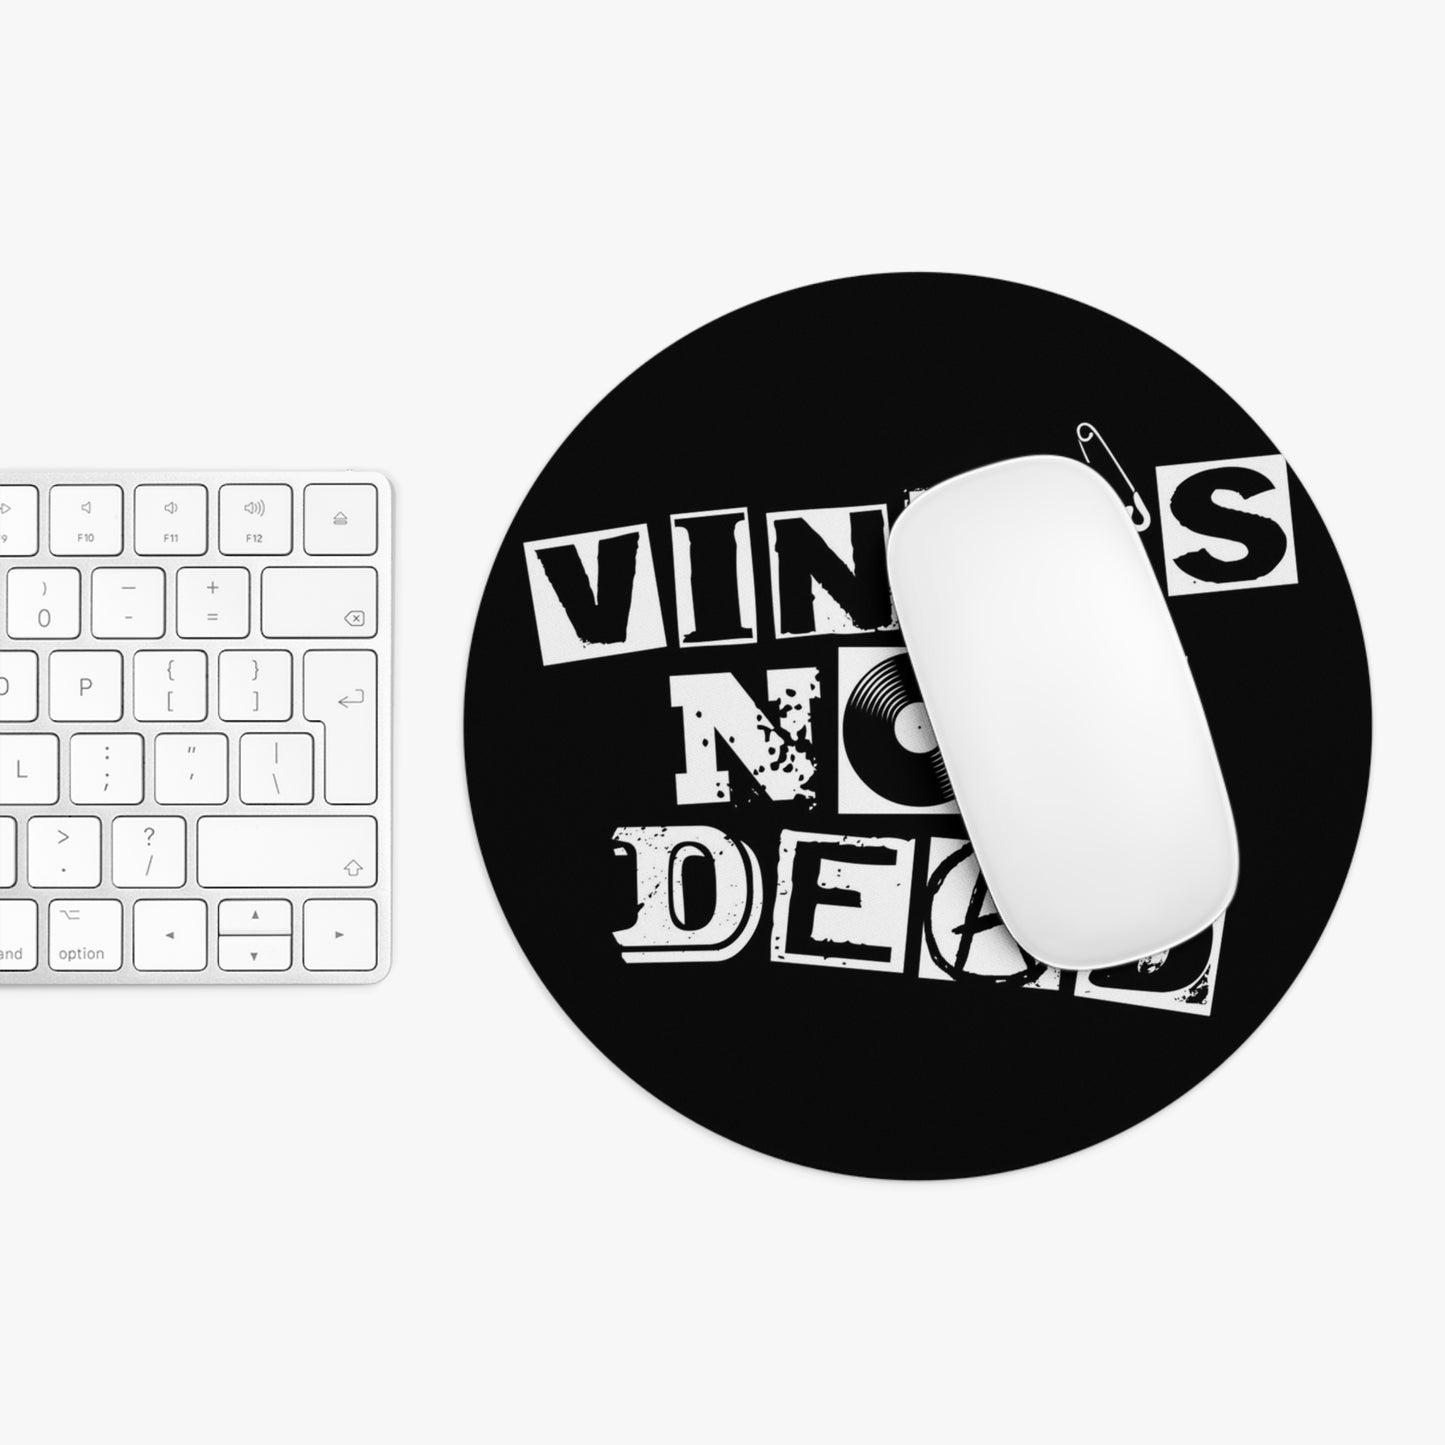 Vinyl Record Themed Mouse Pad - Vinyl is Not Dead Print on desk